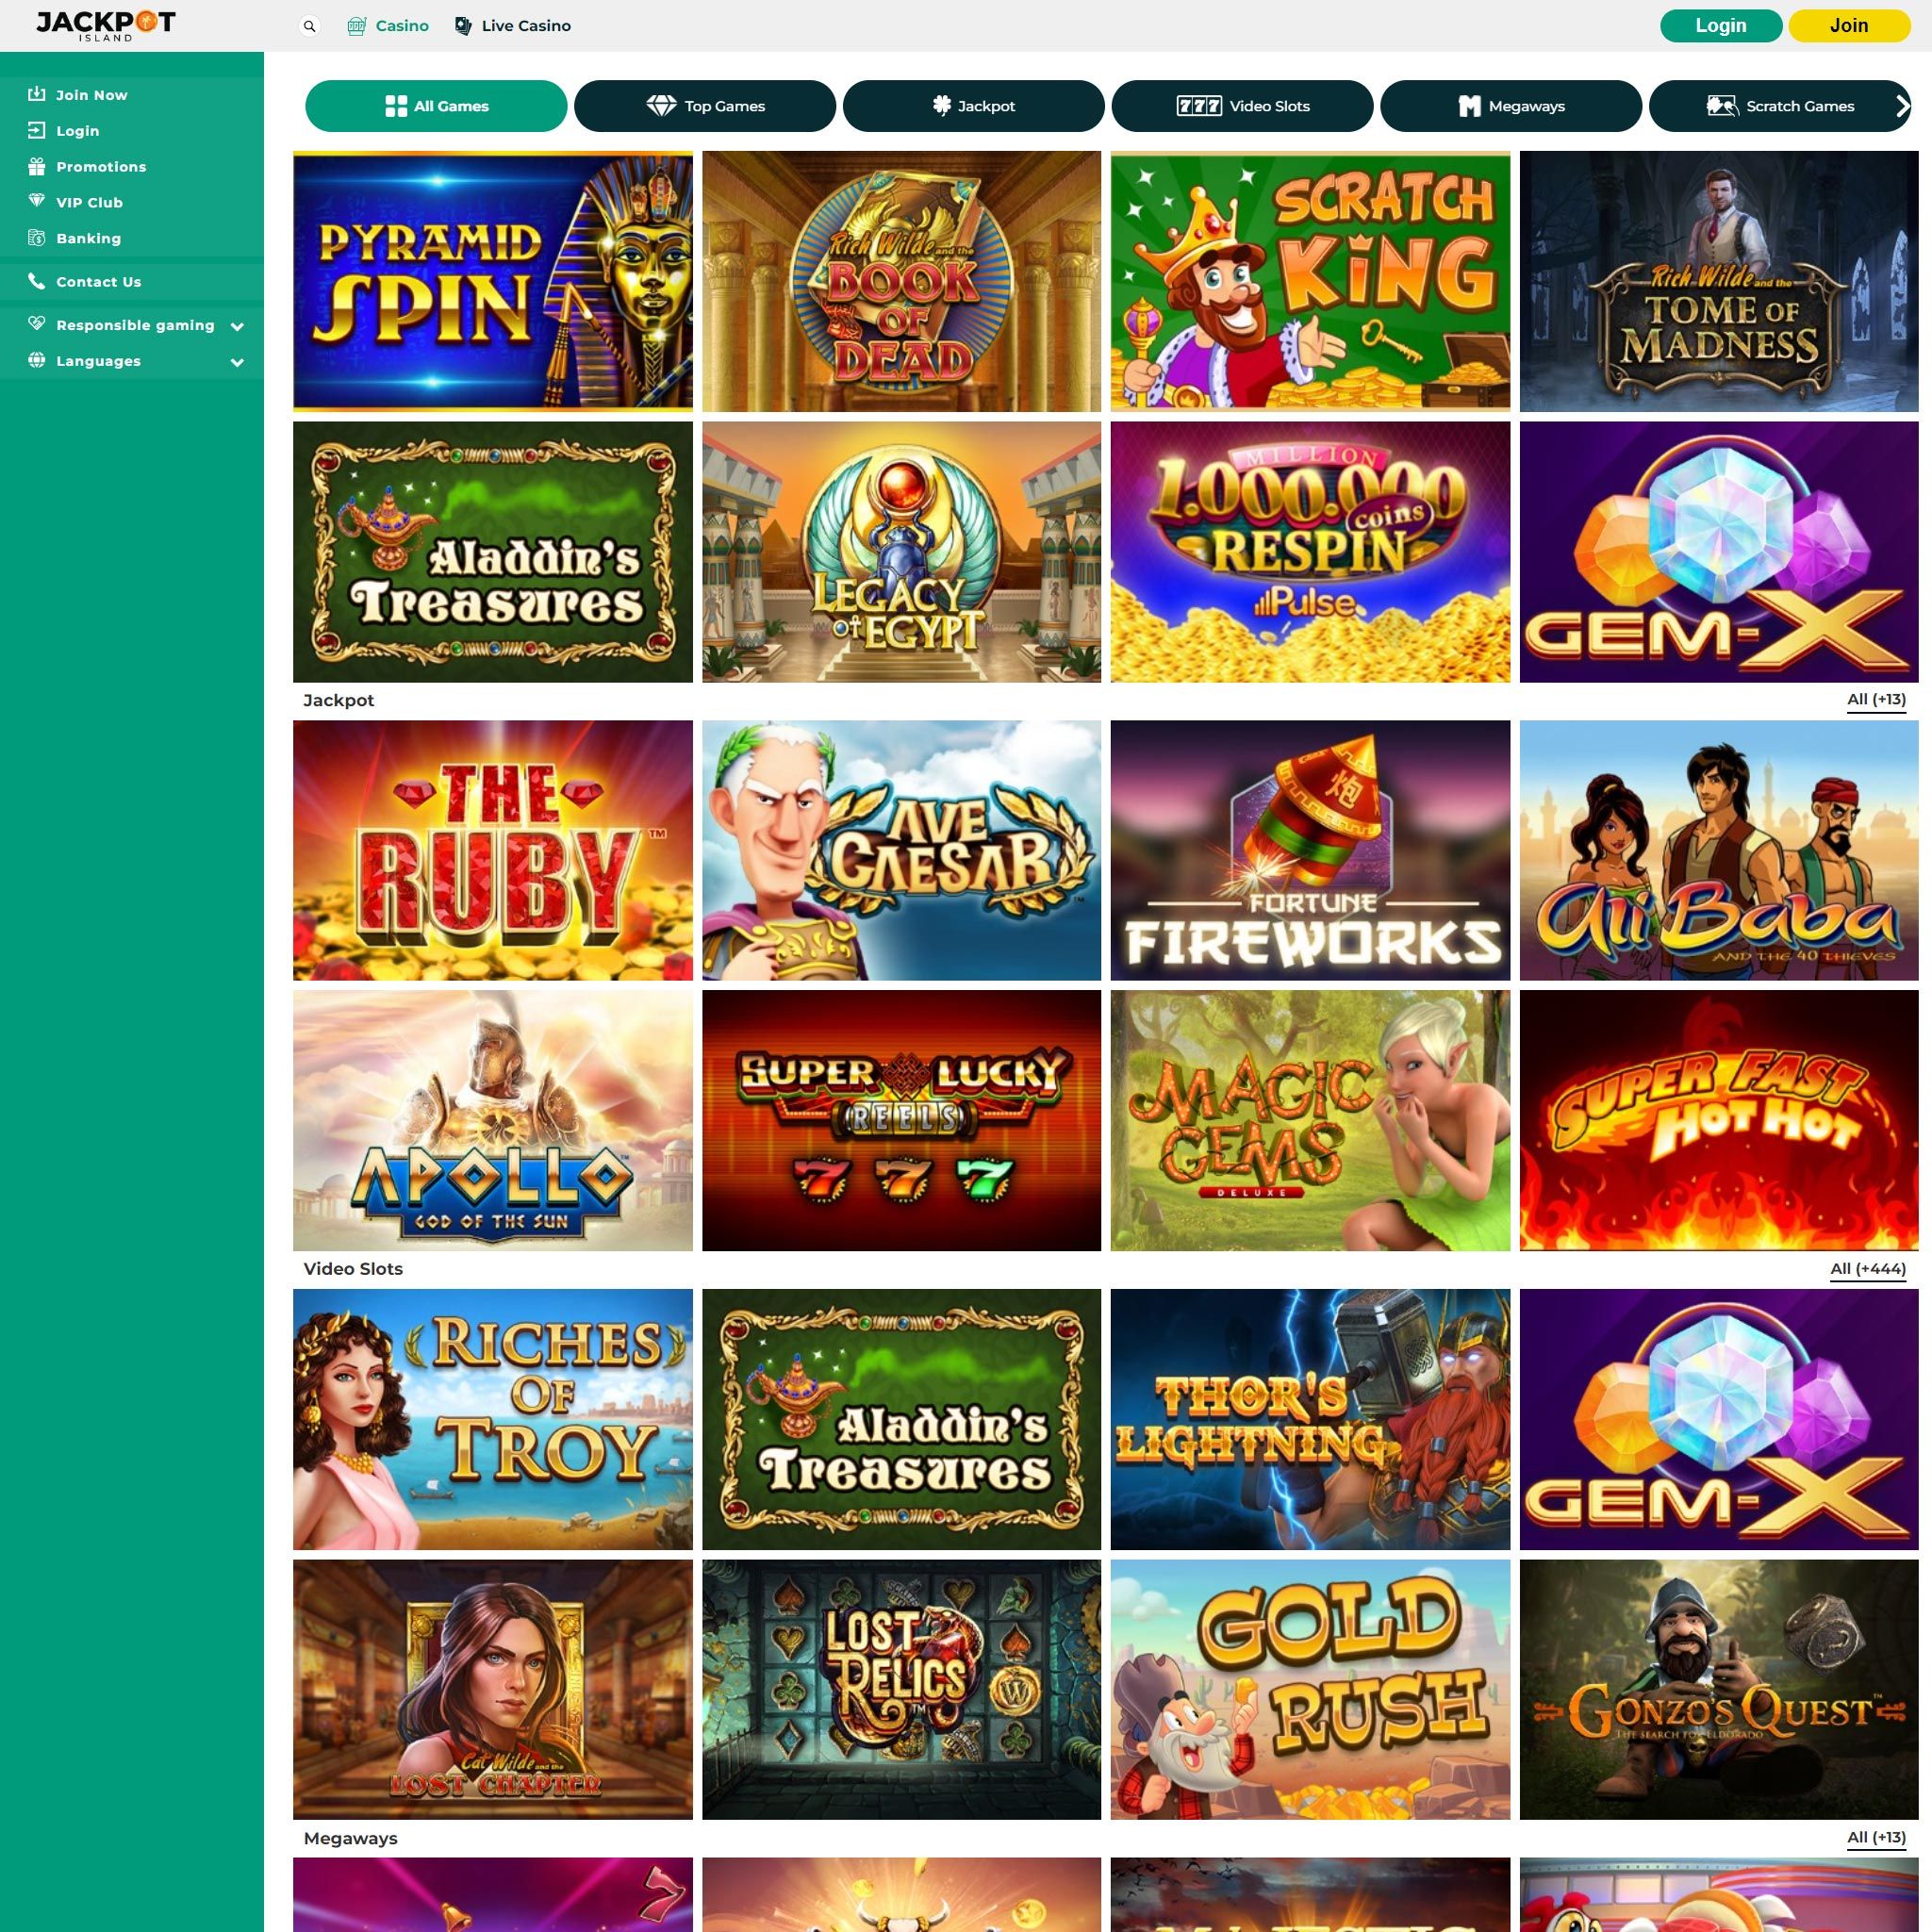 Jackpot Island Casino full games catalogue